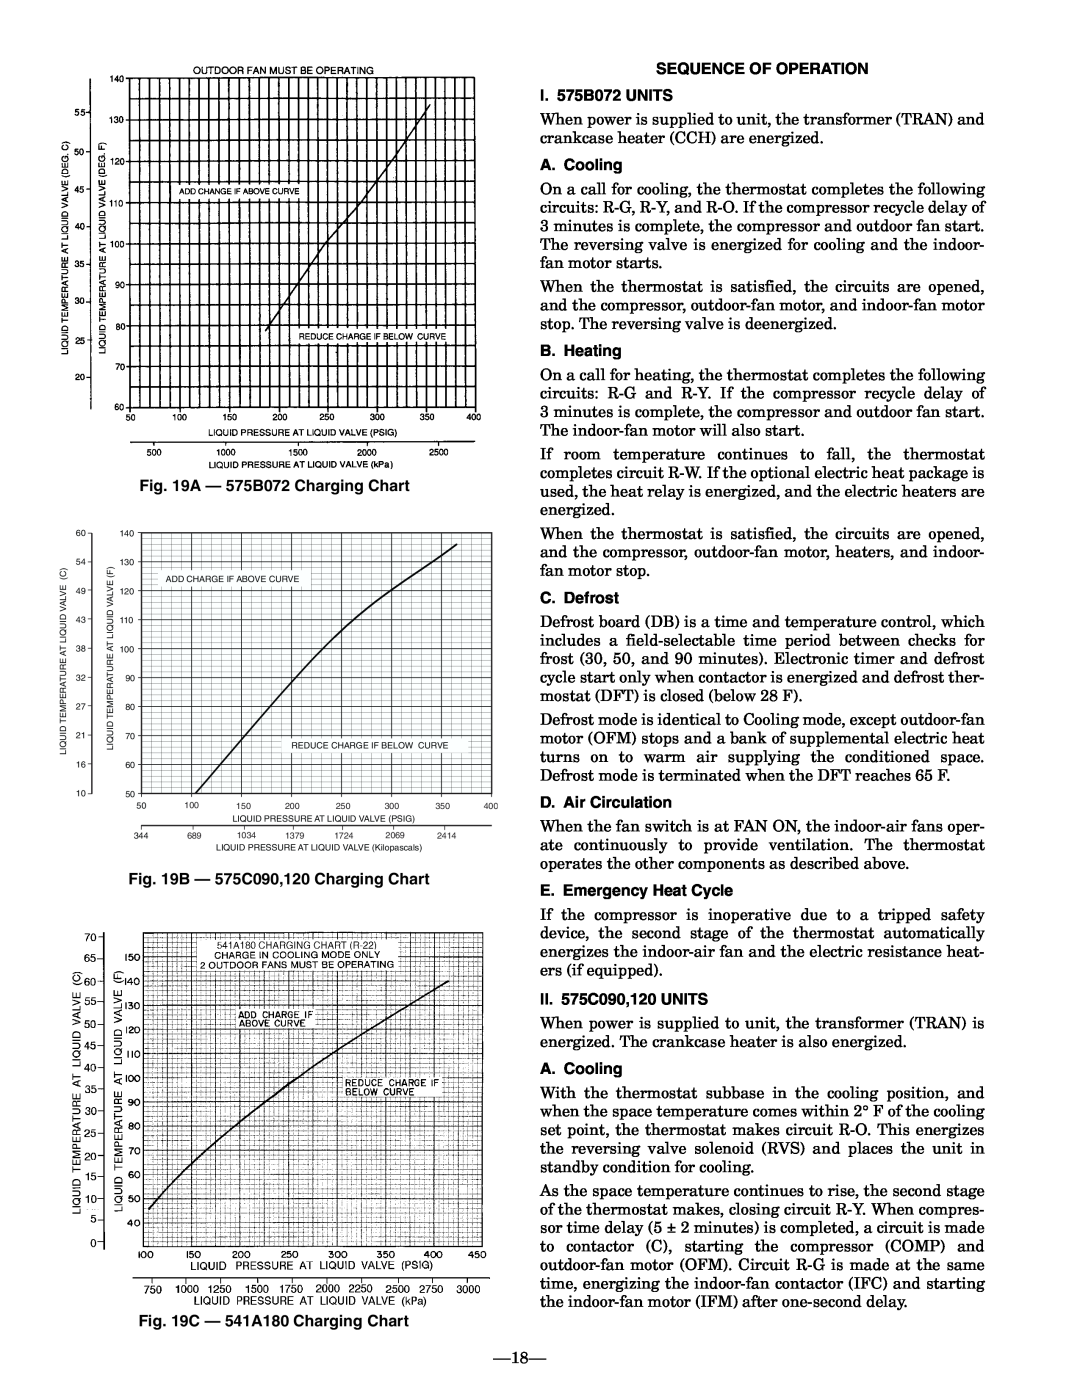 Bryant A - 575B072 Charging Chart, B - 575C090,120 Charging Chart, C - 541A180 Charging Chart, A. Cooling, B. Heating 